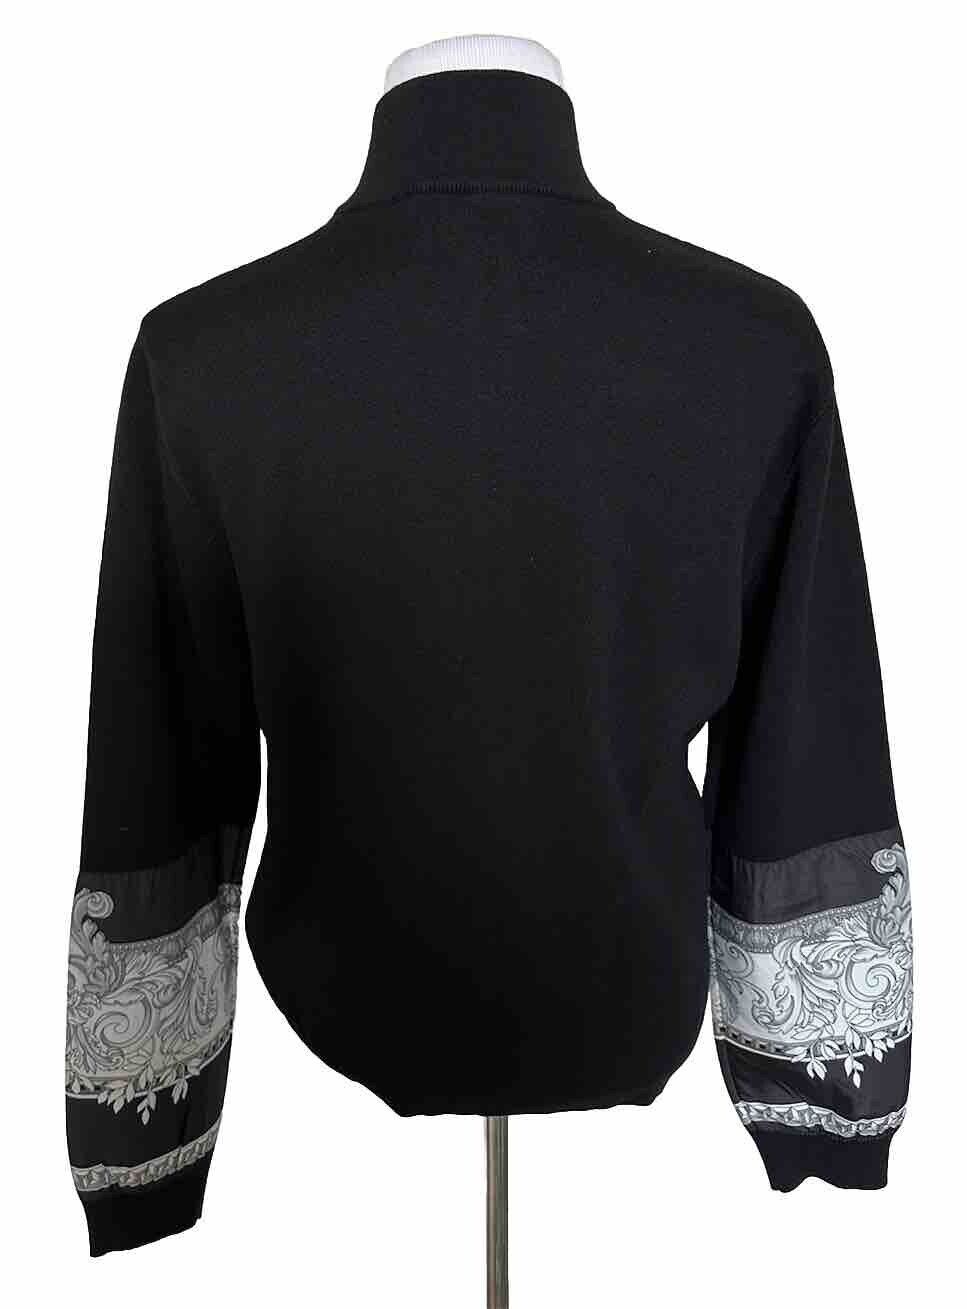 NWT $1750 Versace Renaissance Mens Cotton/Wool Knit Jacket Black 54 1012544